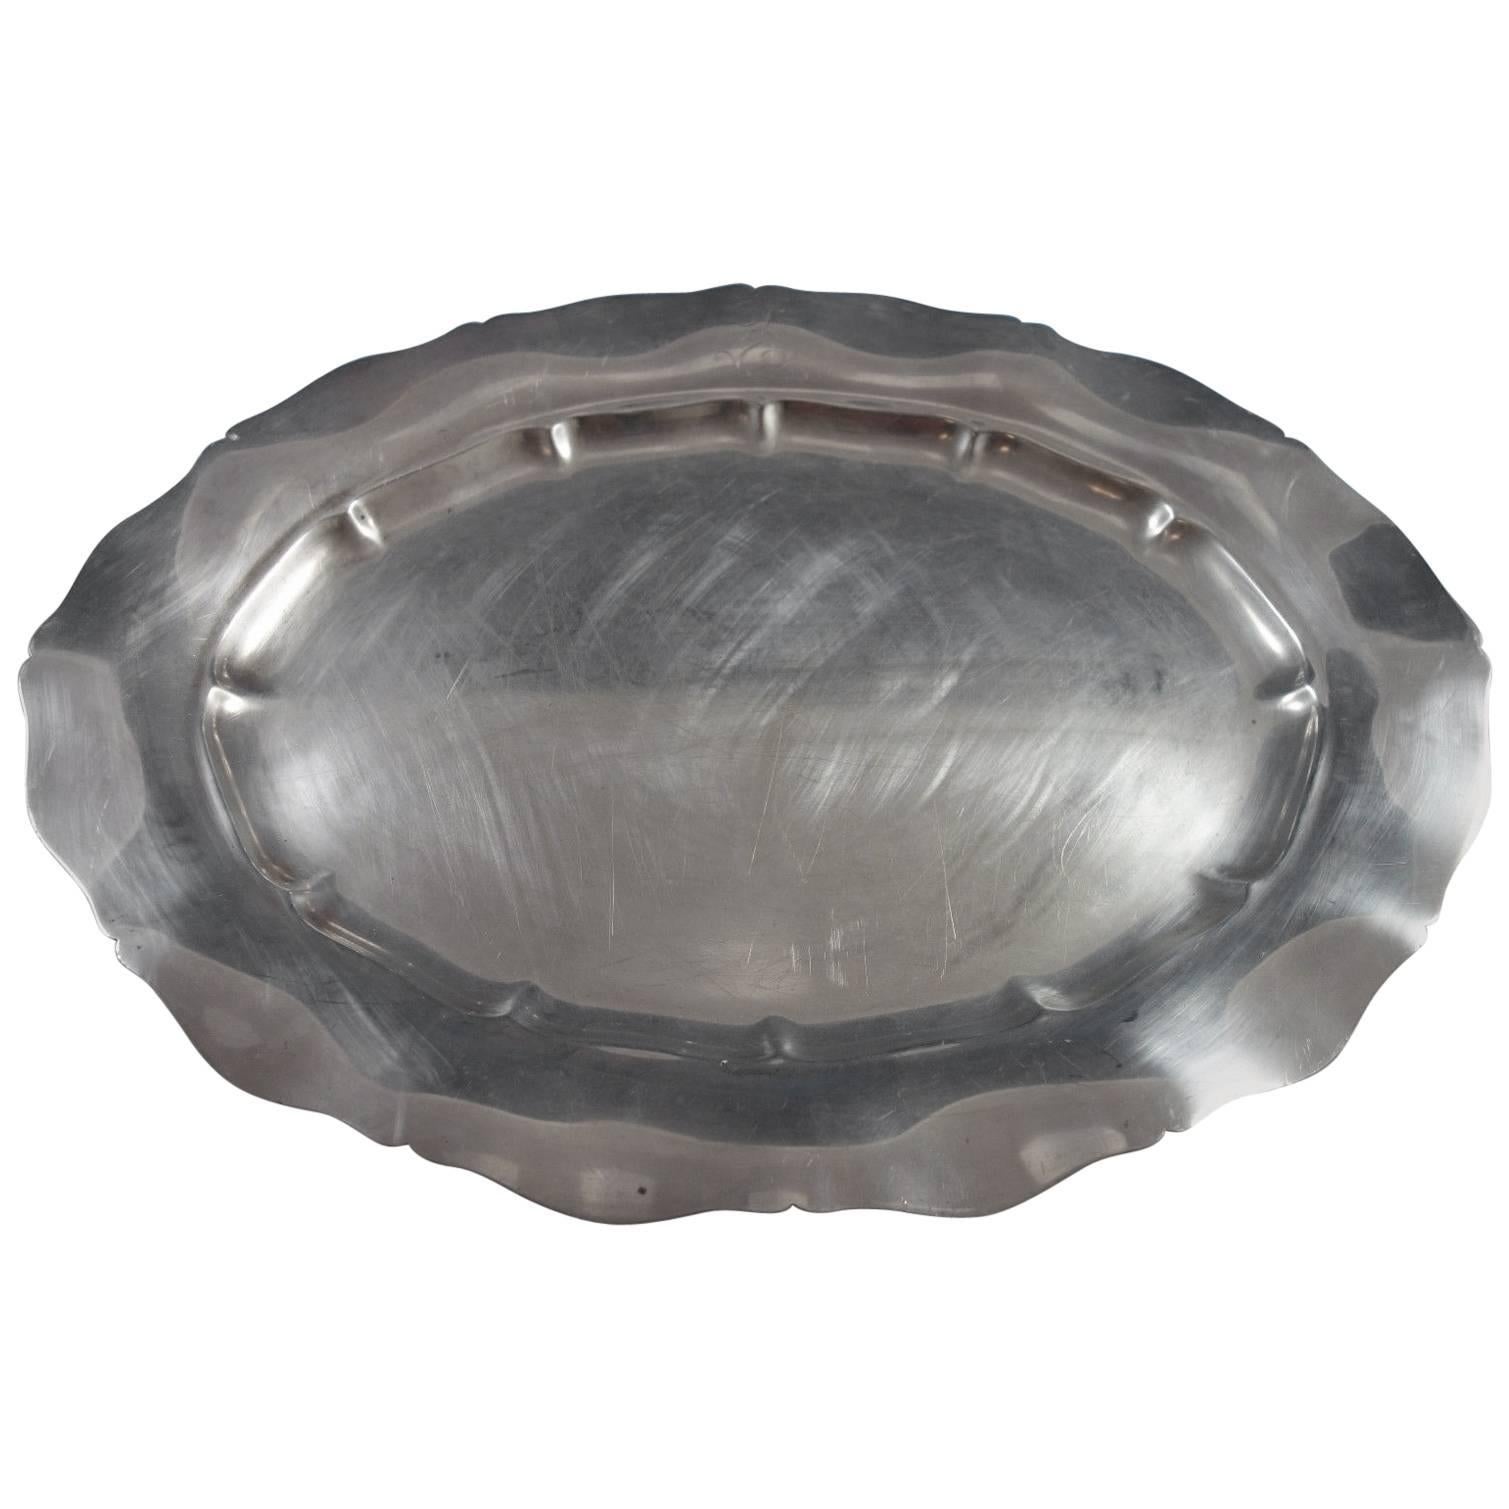 Standish by Gorham Sterling Silver Platter, Marked #40601, Heavy, Hollowware